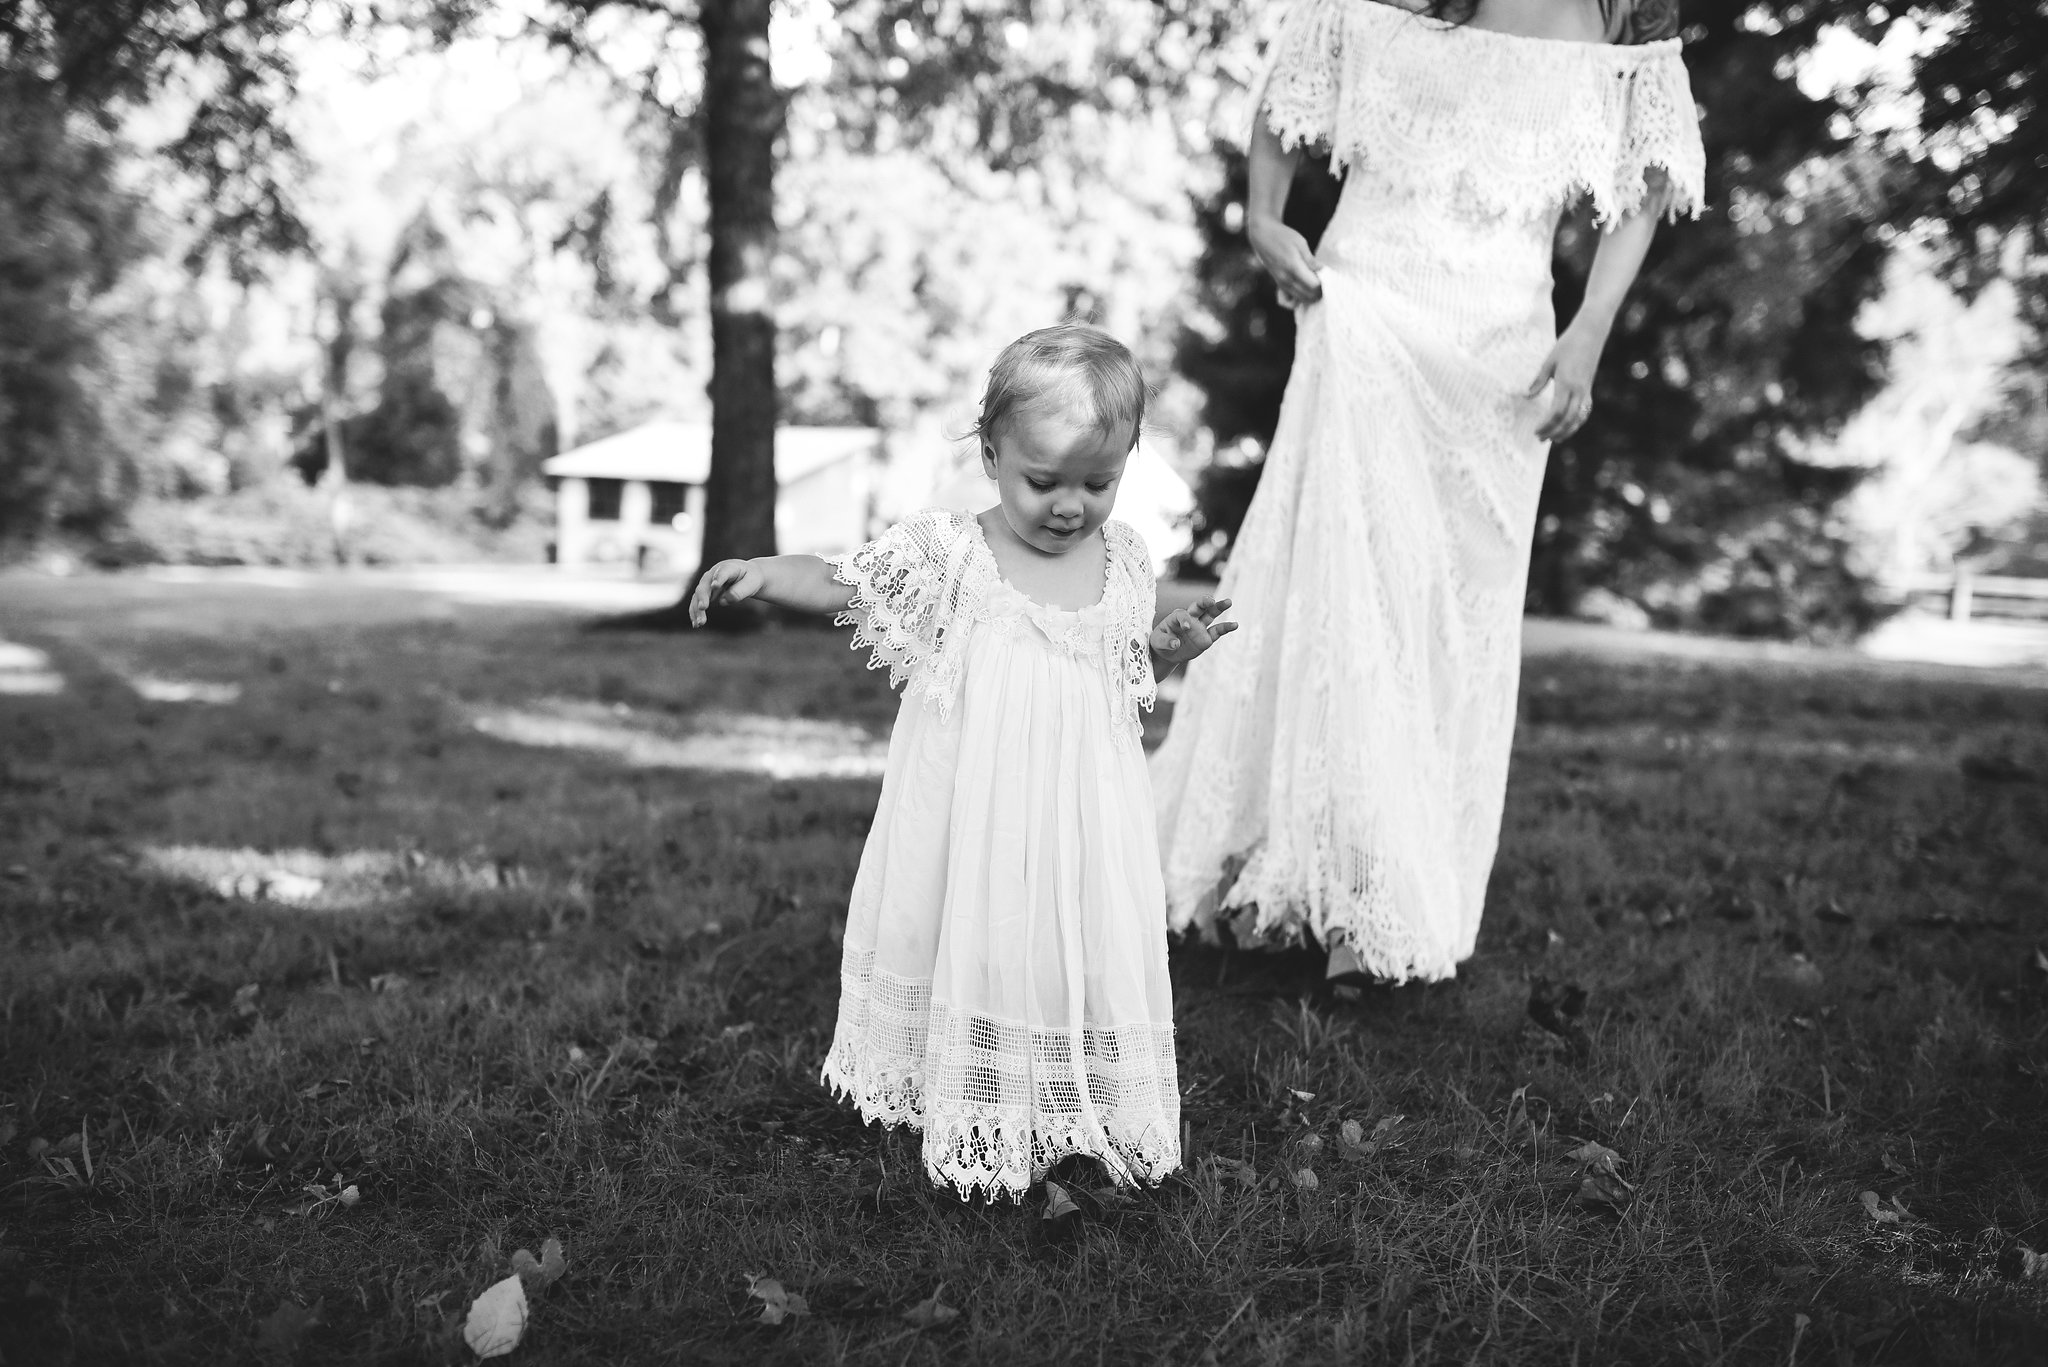  Maryland, Eastern Shore, Baltimore Wedding Photographer, Romantic, Boho, Backyard Wedding, Nature, Bride Walking with Flower Girl in Lace Dress, Black and White Photo 